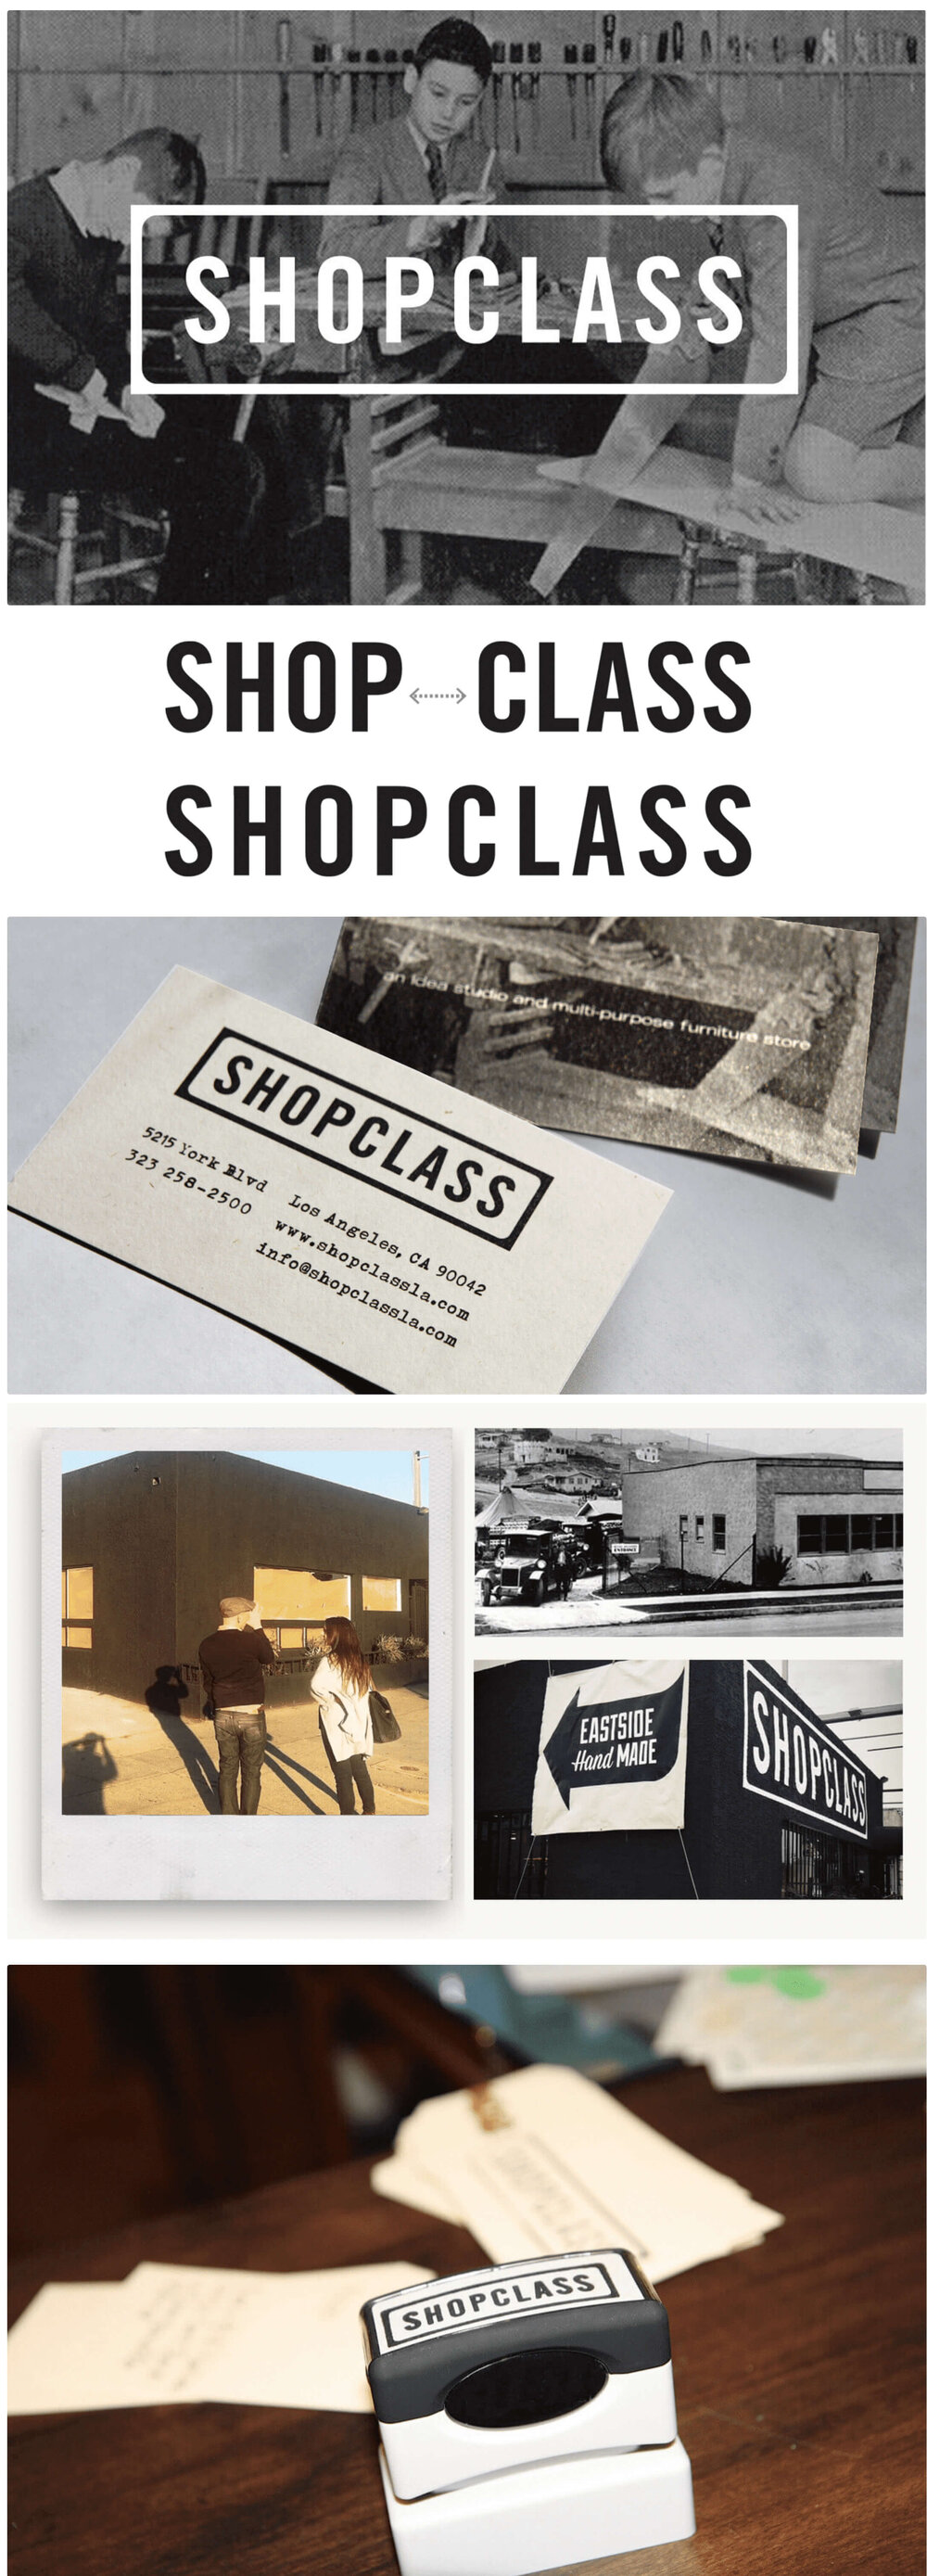 shopclass-retail-store-brand-design-1.jpg